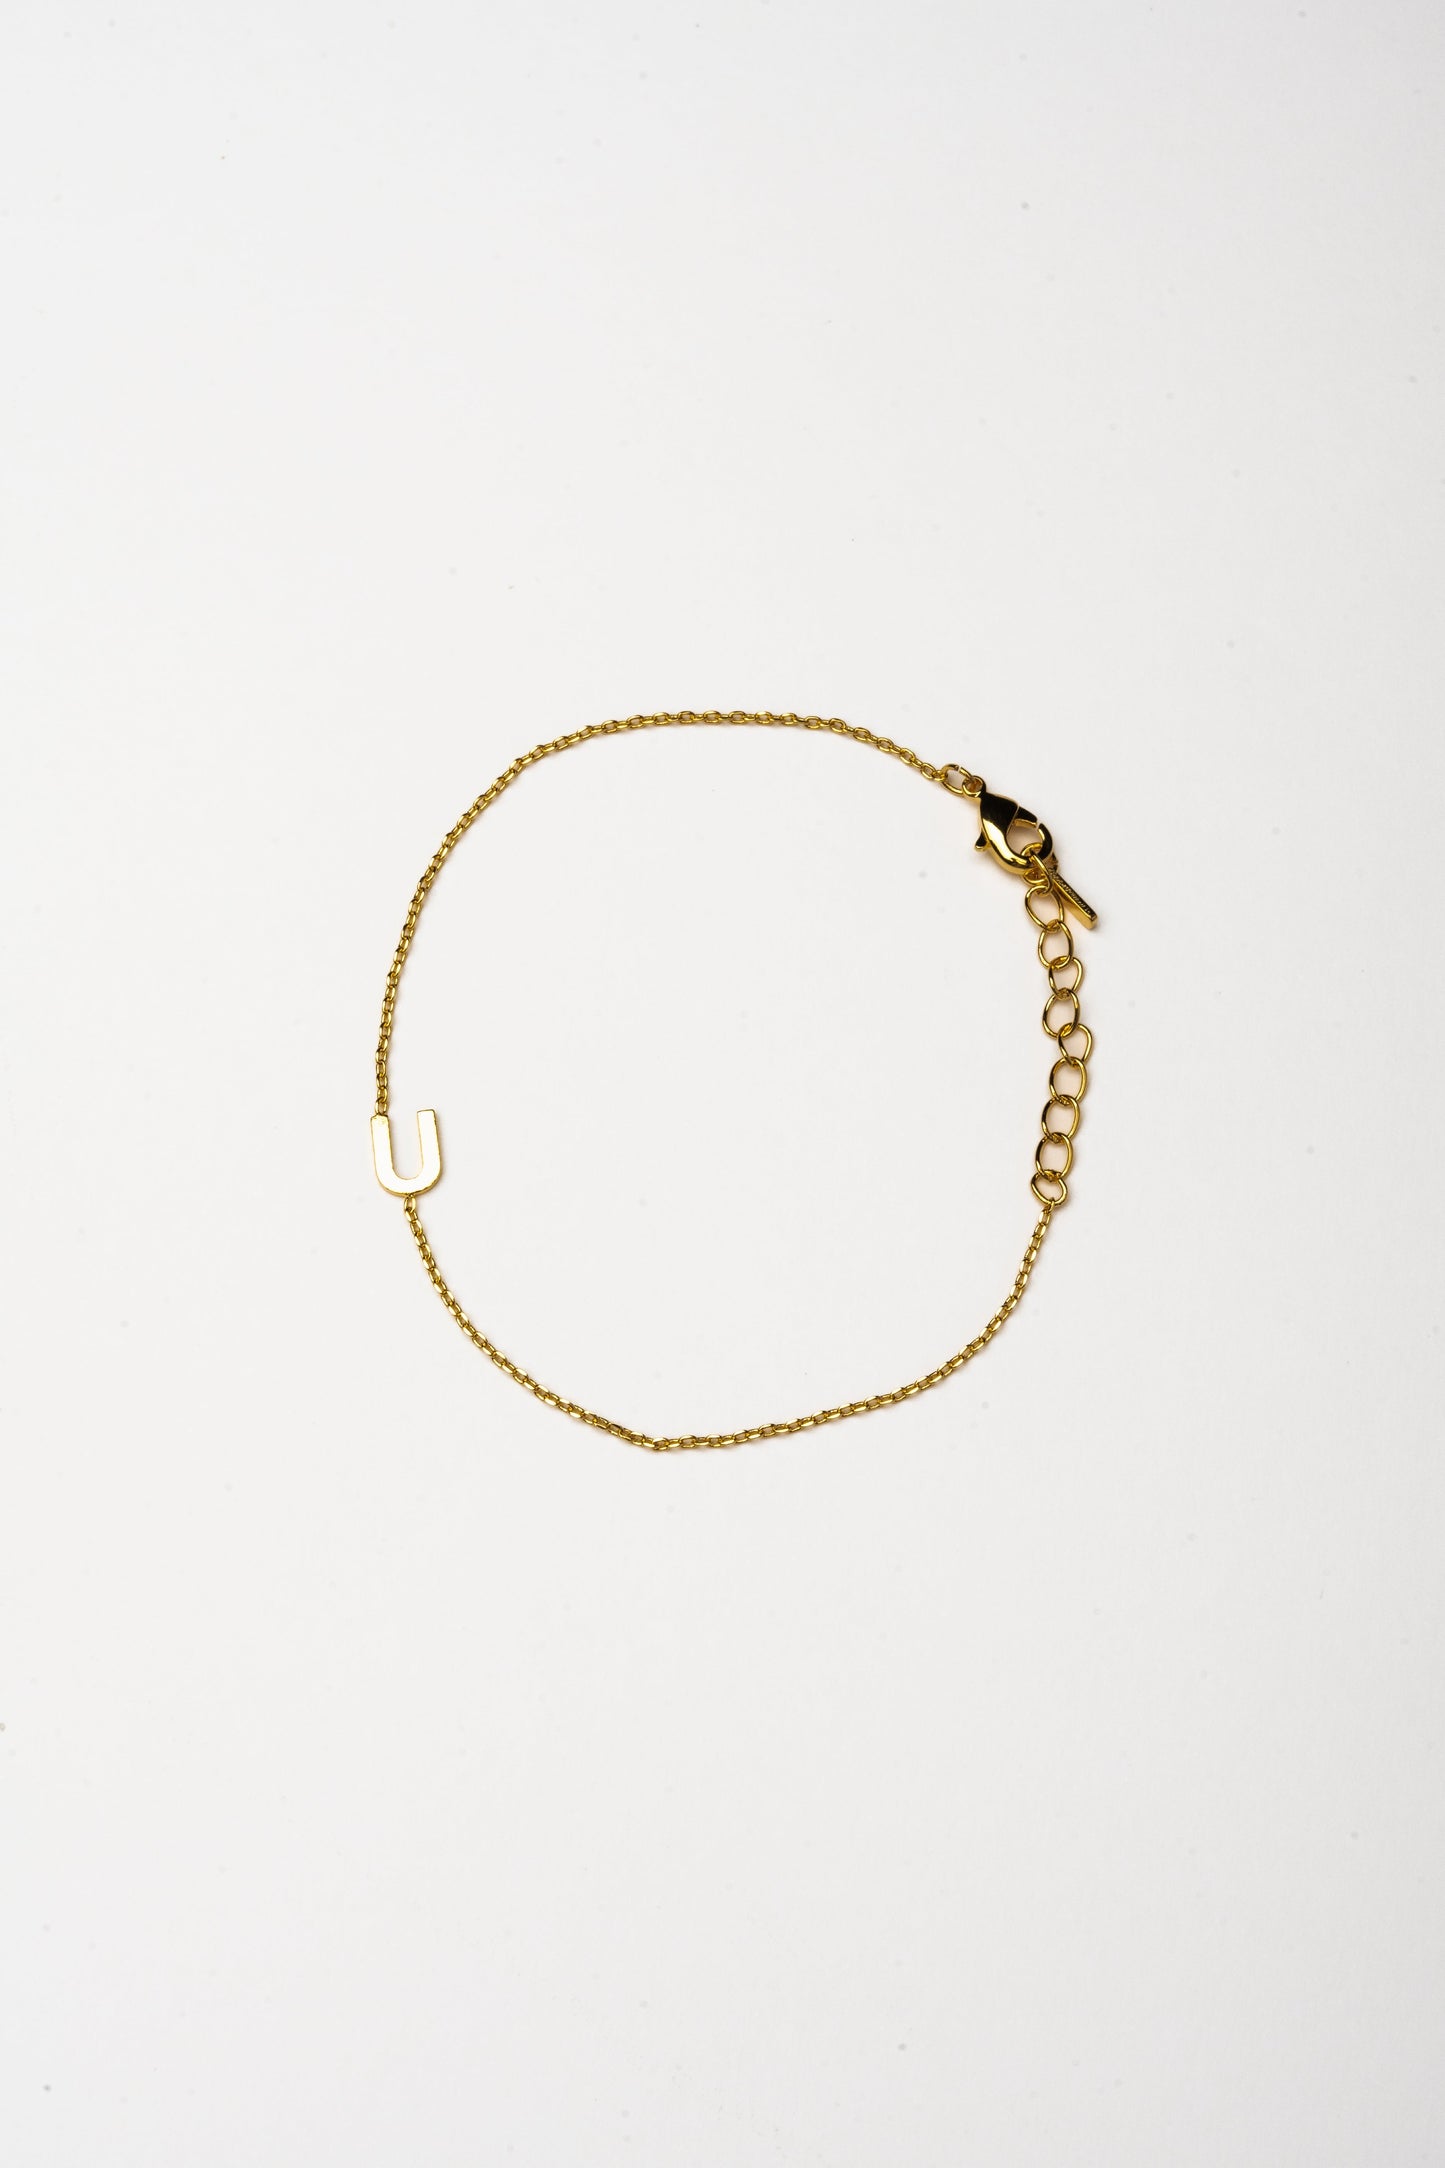 Cove Initial Bracelet WOMEN'S BRACELET Cove Accessories 18k Gold Plated 7" + 1" extender U